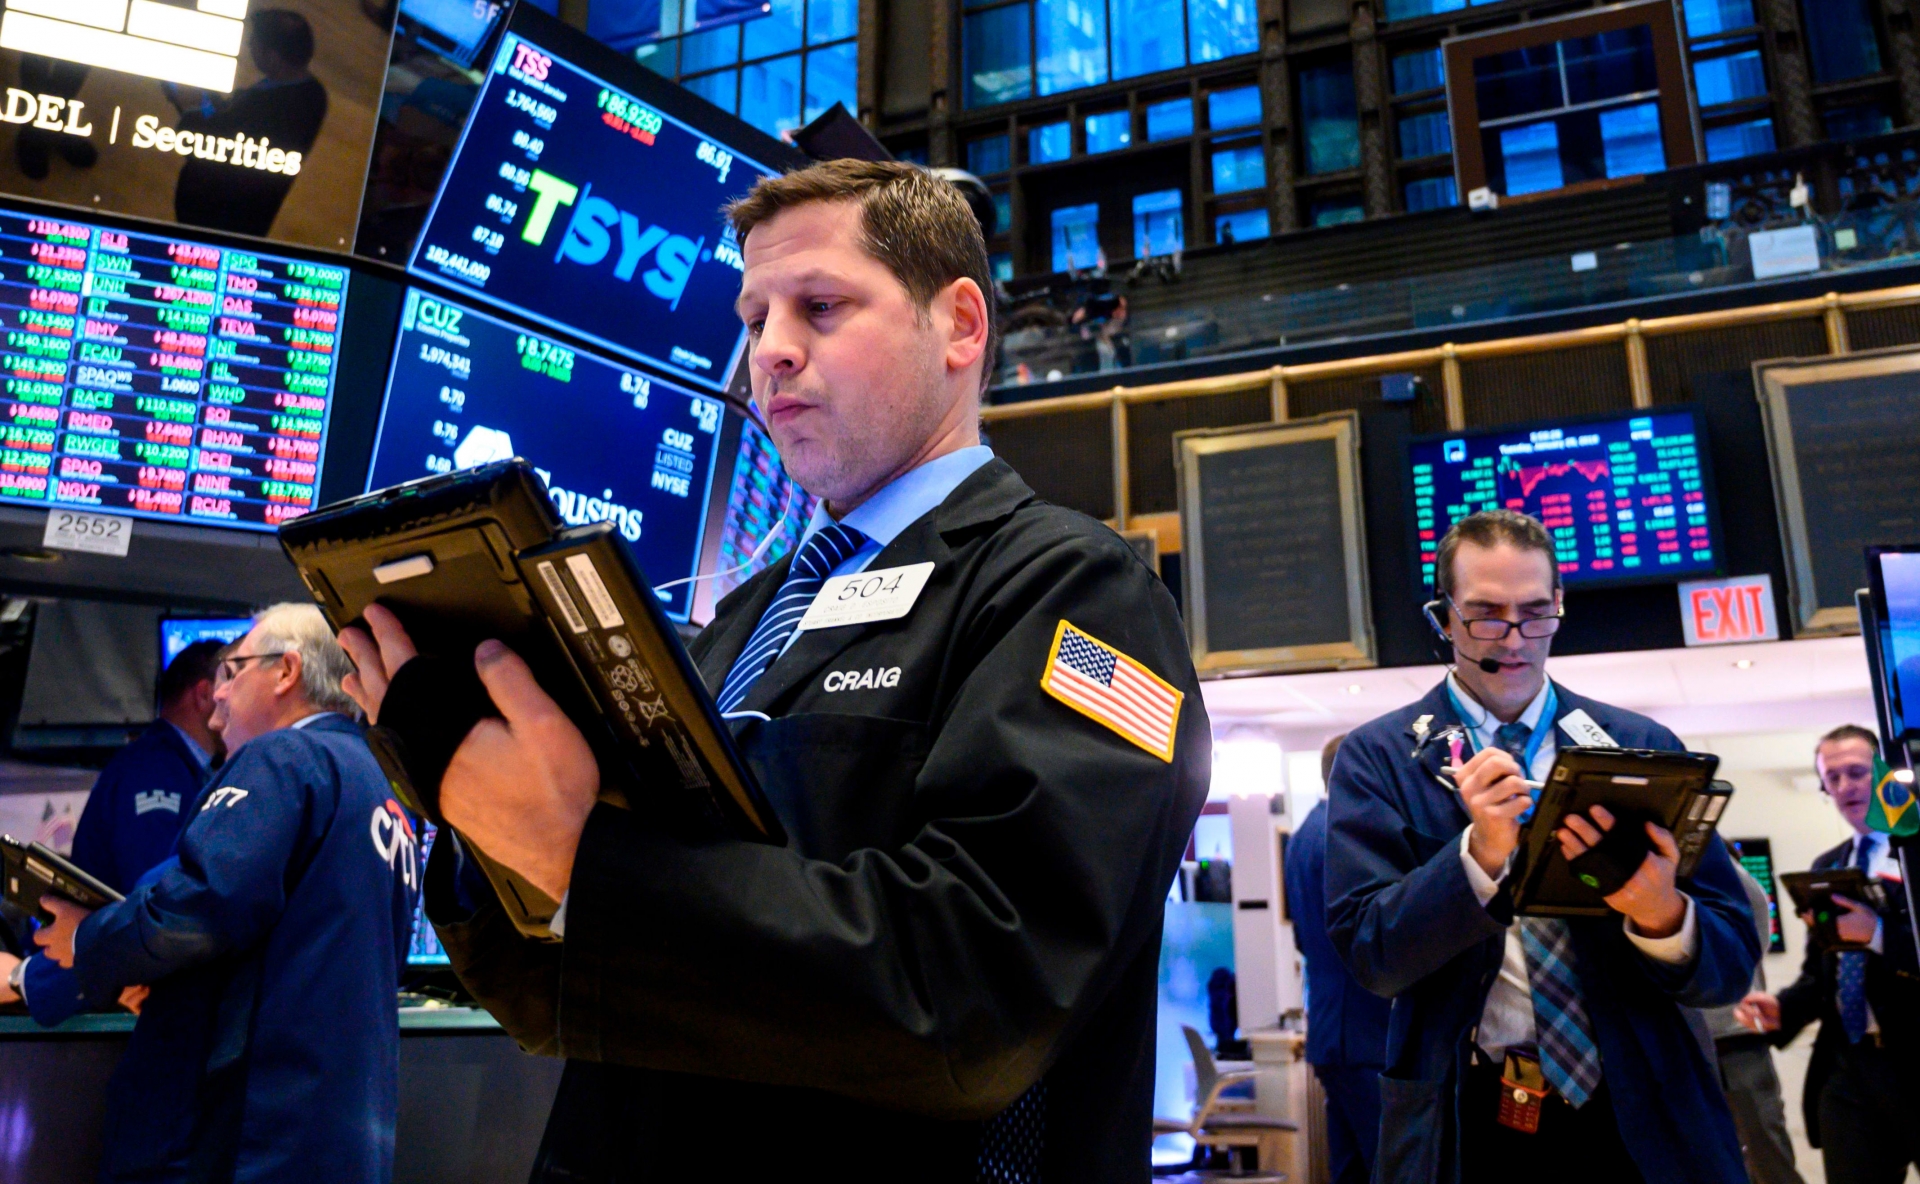 stock price today us stocks climb on economy recovery optimism oil price rebound